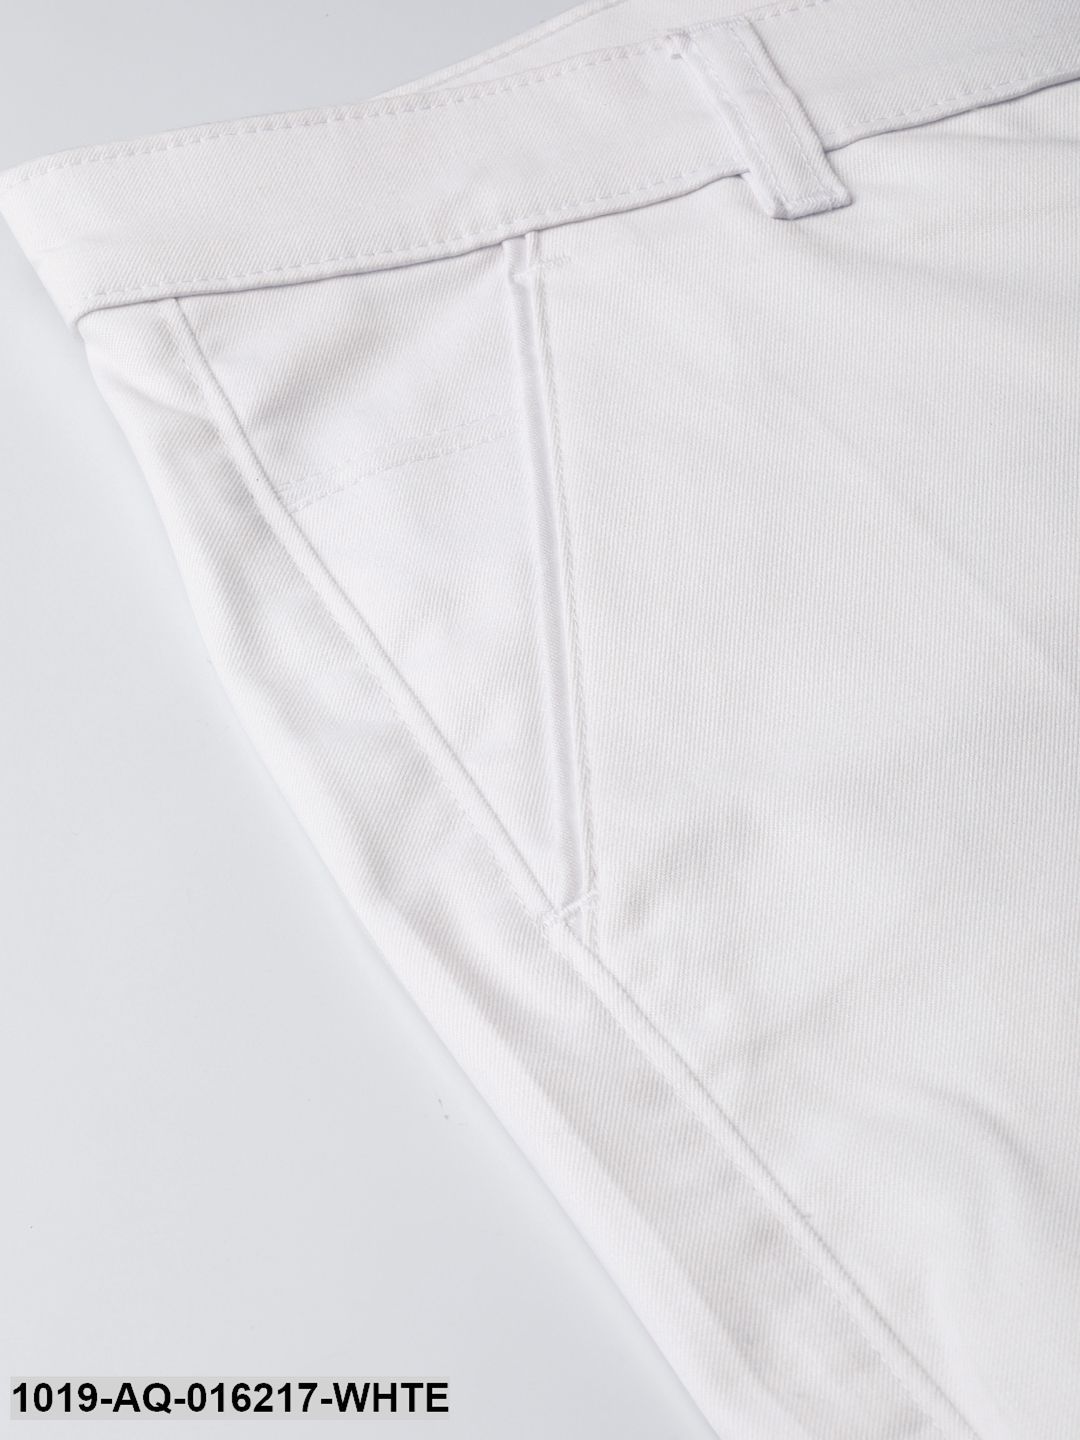 Men's Cotton Blend White Solid Formal Trousers - Sojanya